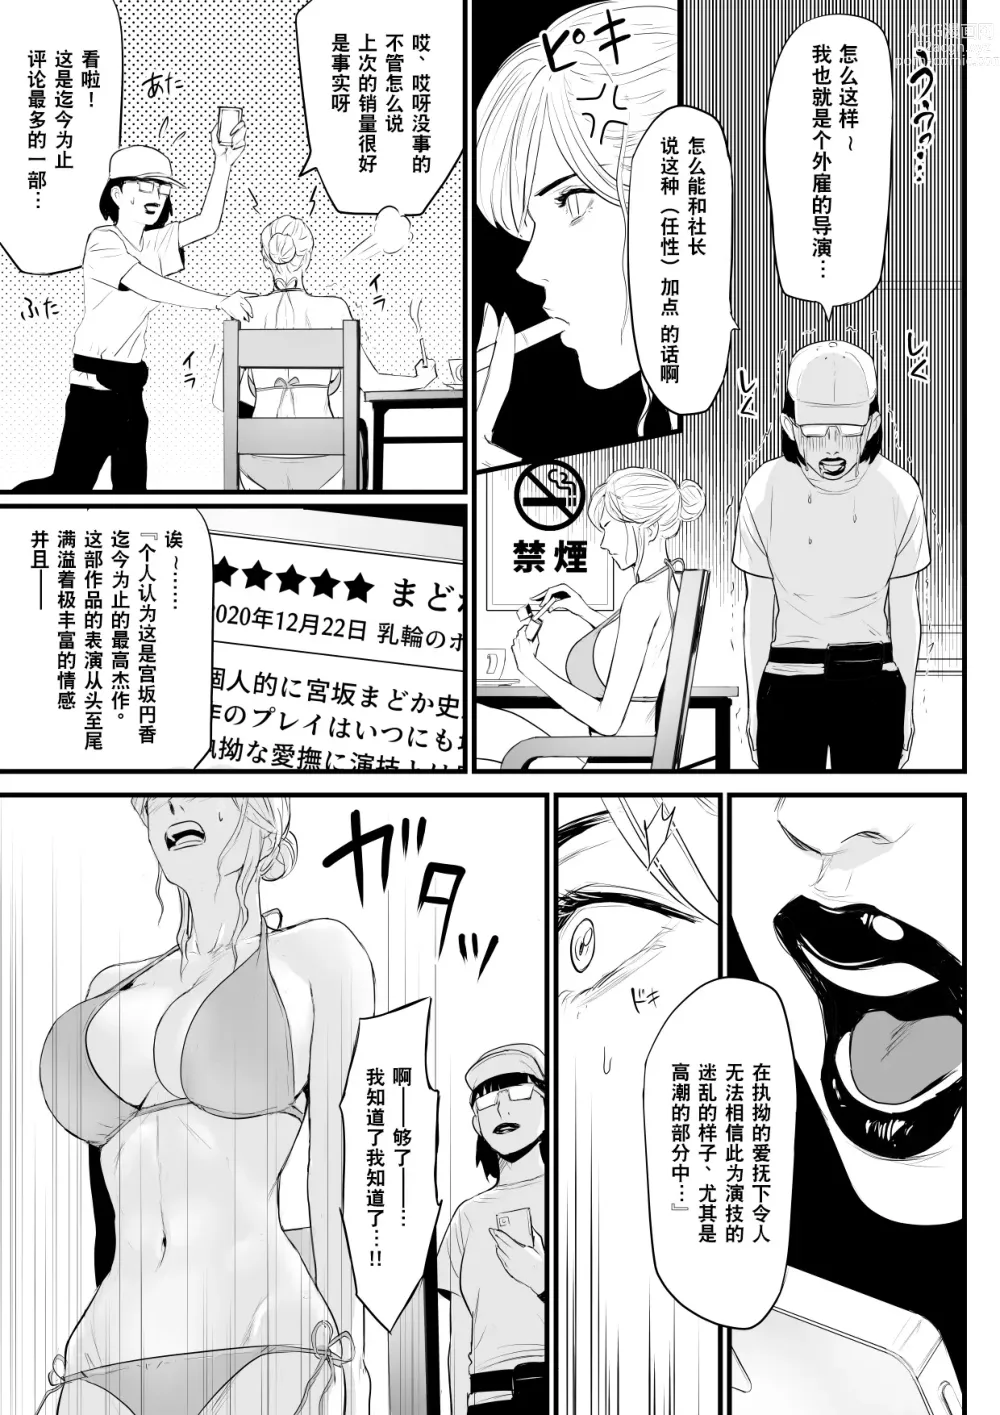 Page 5 of doujinshi 直到AV女优(23岁)撤回引退之前都将不断高潮2『时间停止道具篇』